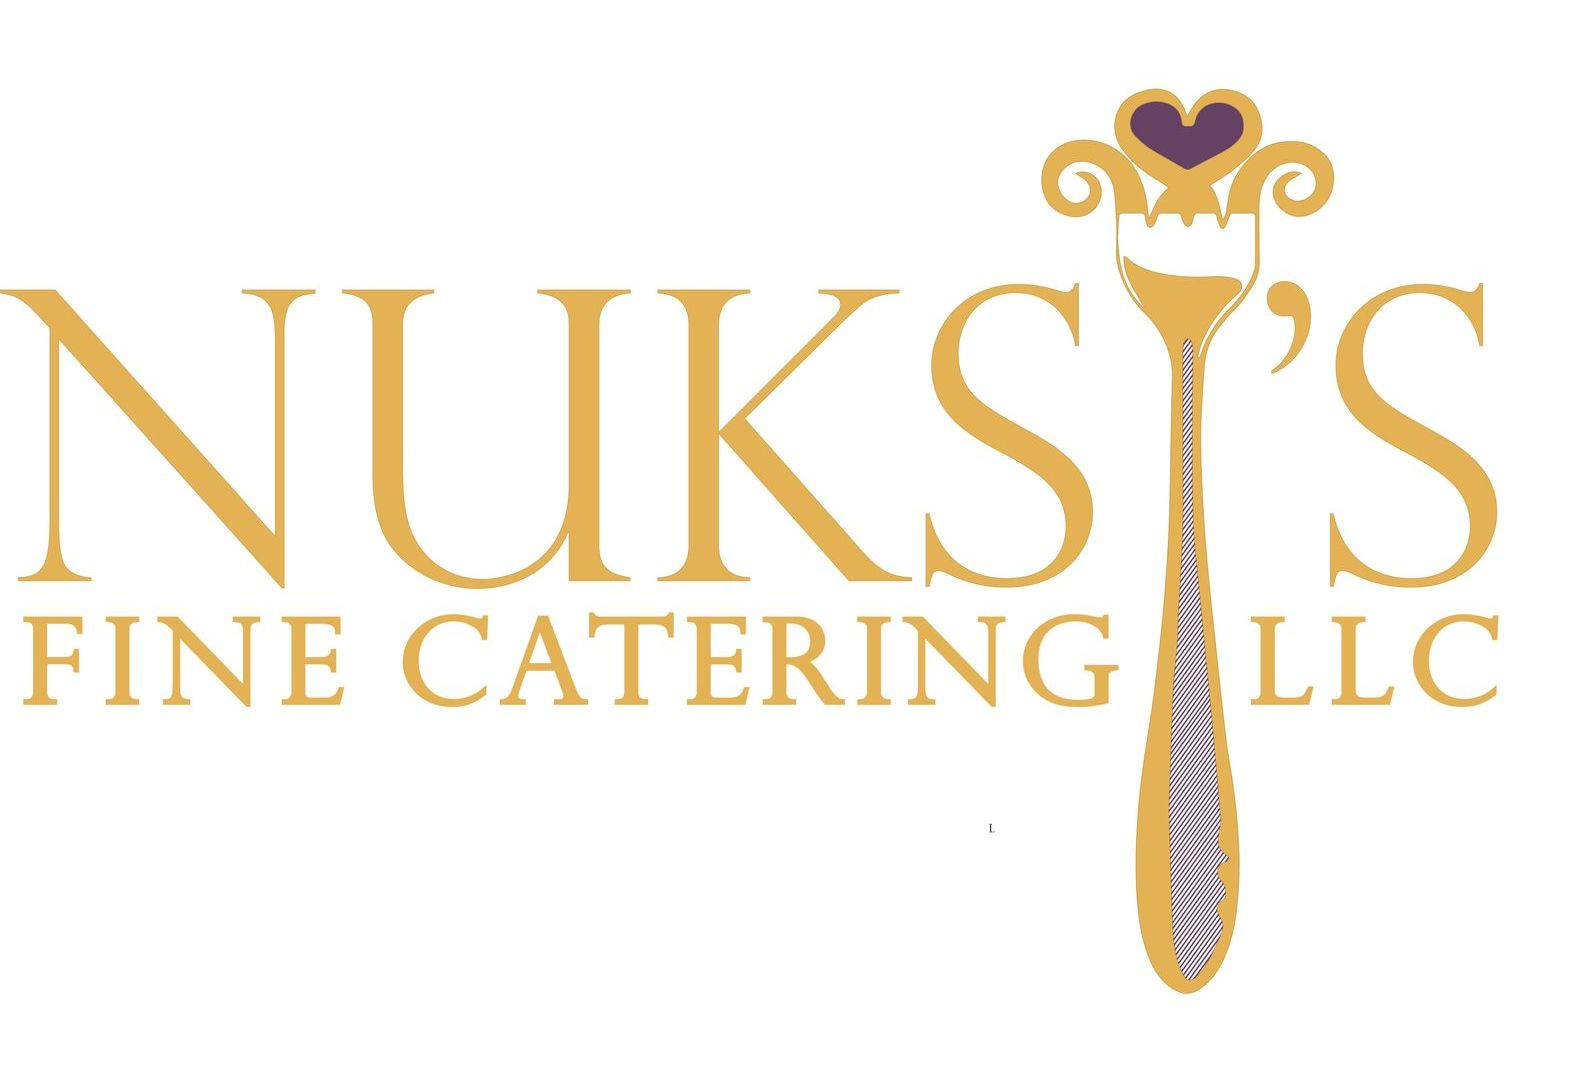 Nuksys Fine Catering LLC